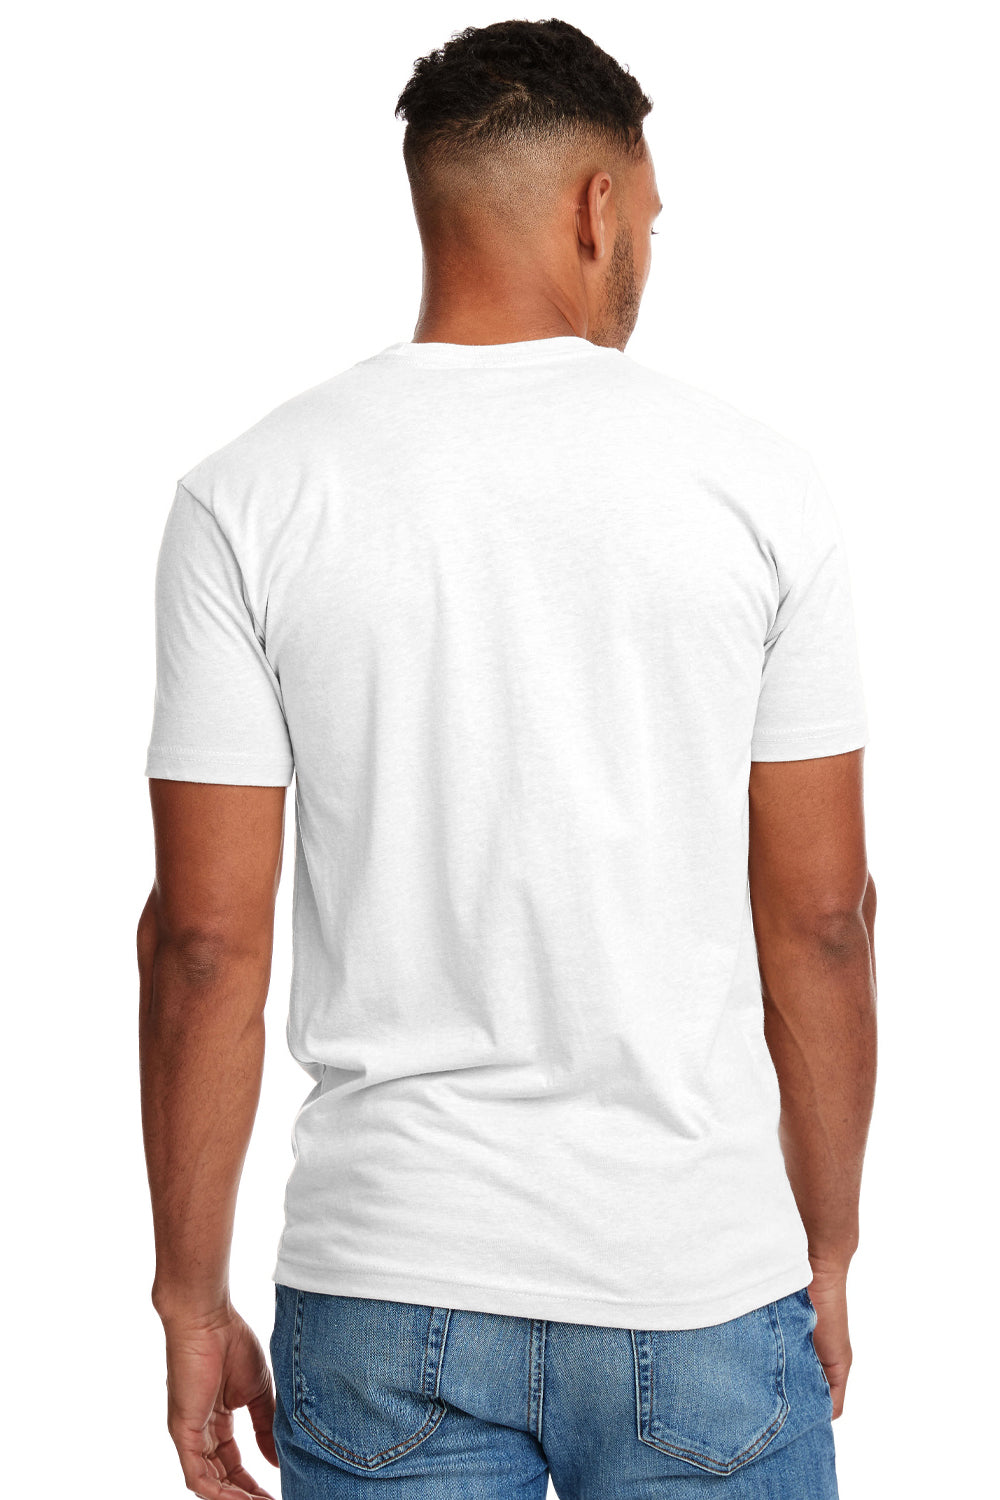 Next Level N6210 Mens CVC Jersey Short Sleeve Crewneck T-Shirt White Back